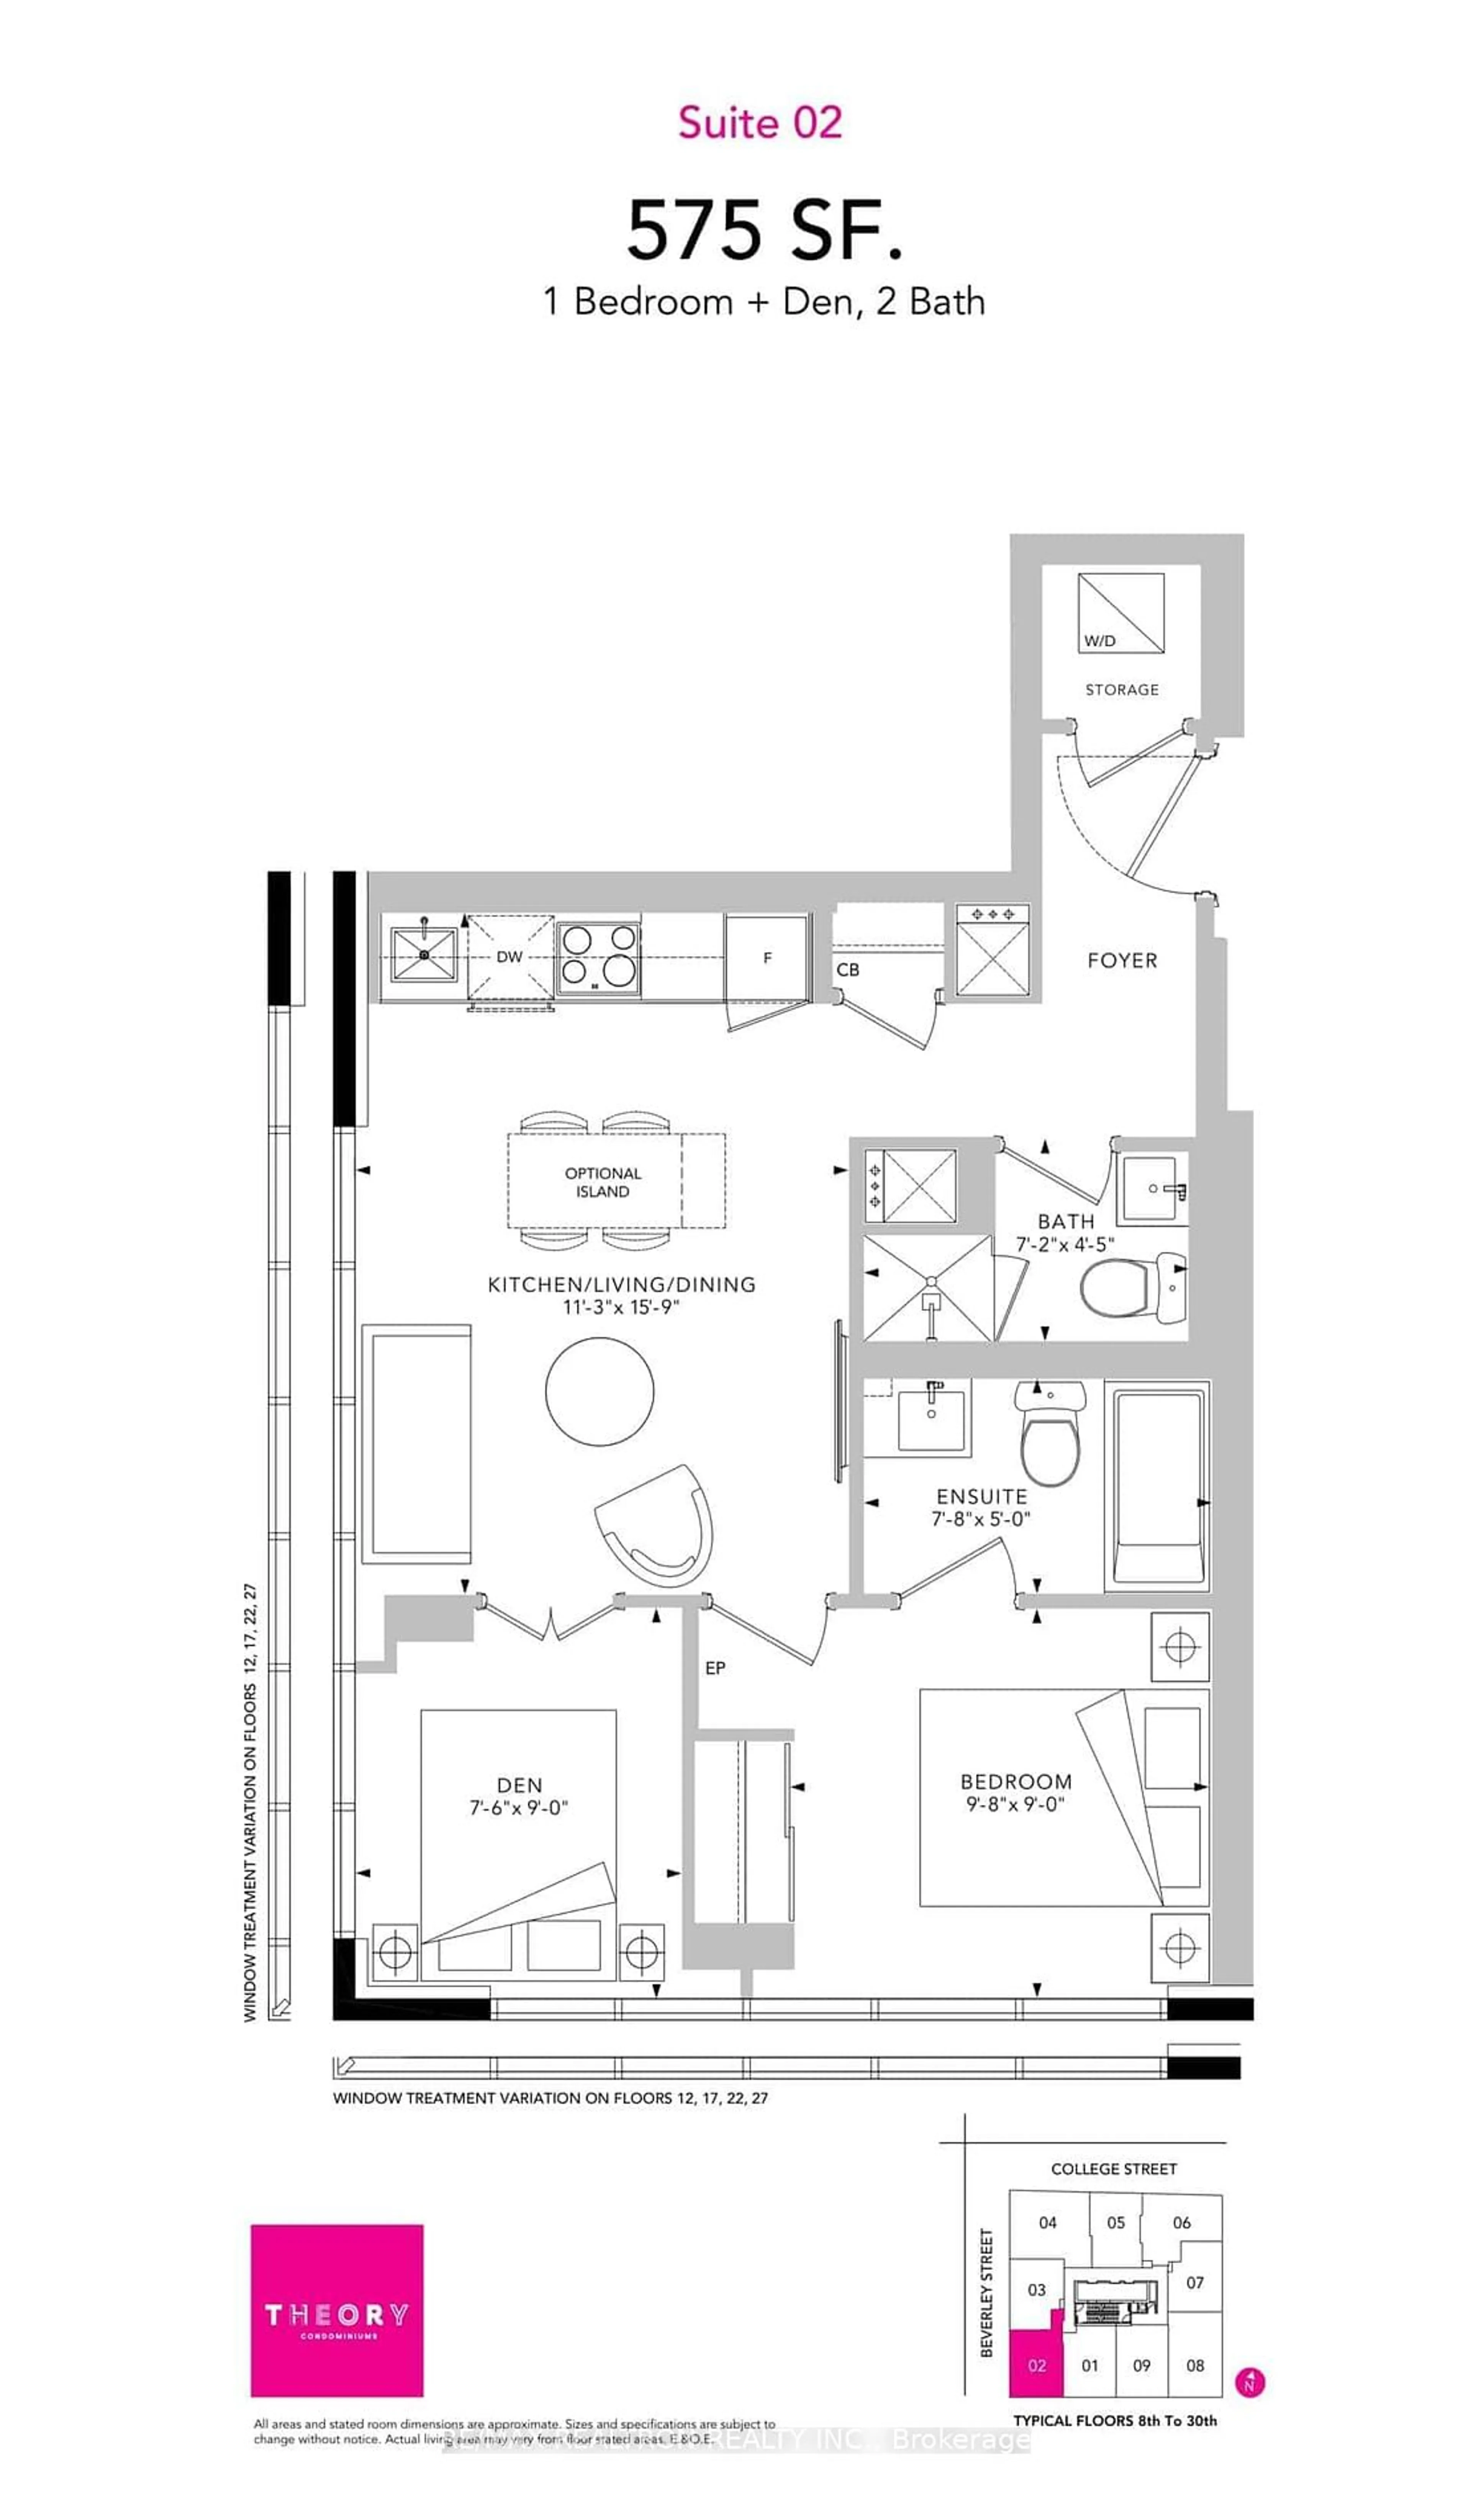 Floor plan for 203 College St #1302, Toronto Ontario M5T 1P9